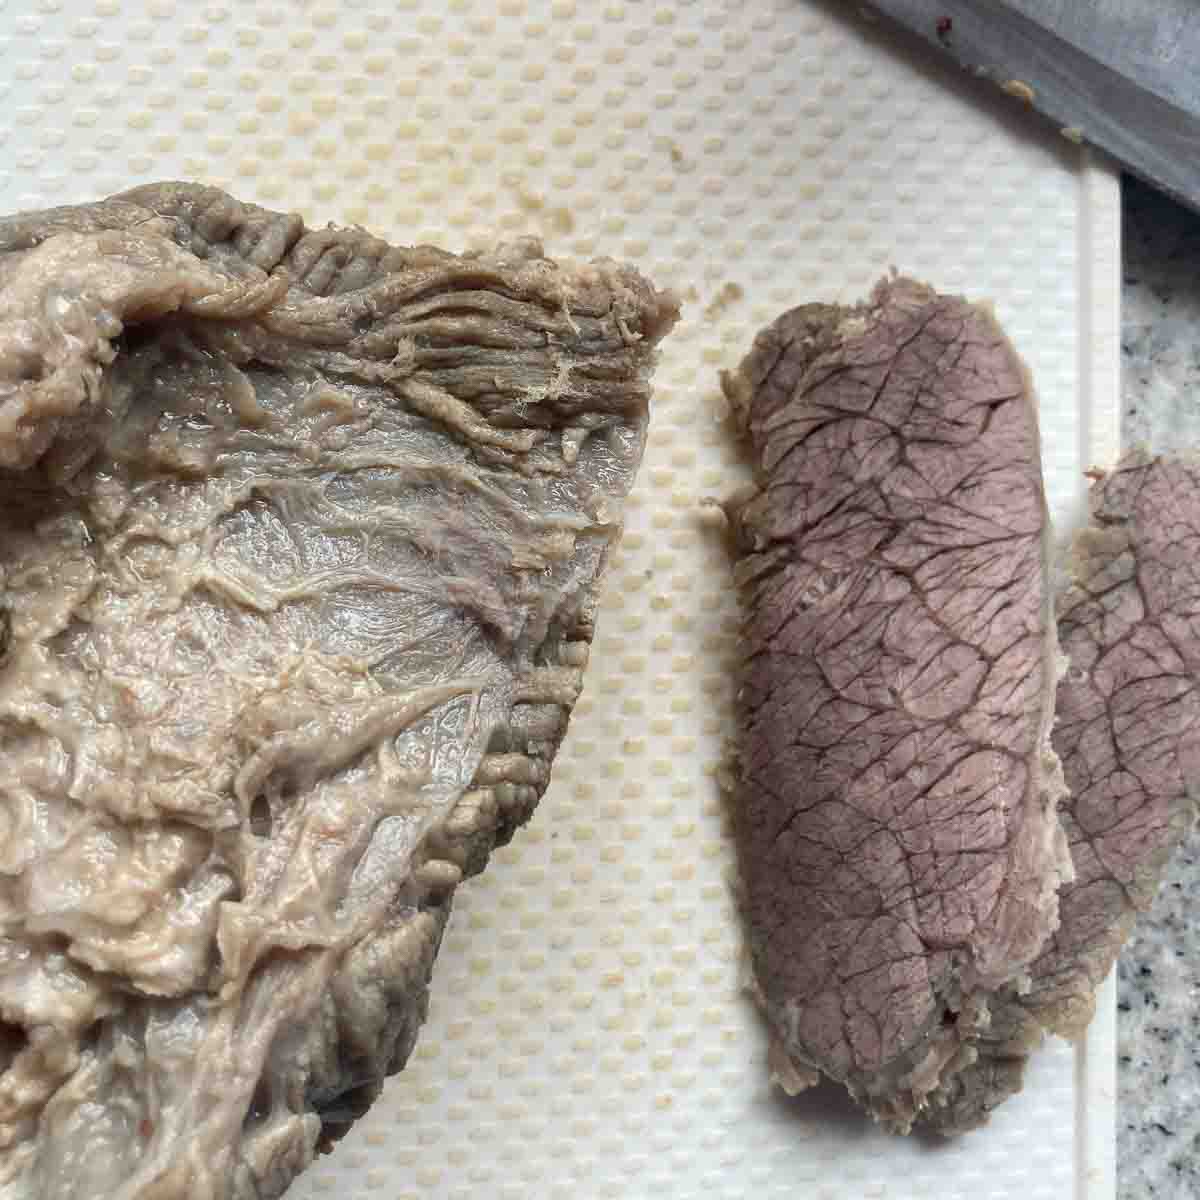 Rindfleisch im ganzen, wo die Fasern gut zu sehen sind | whole piece of beef where you can see the directions of the fibers